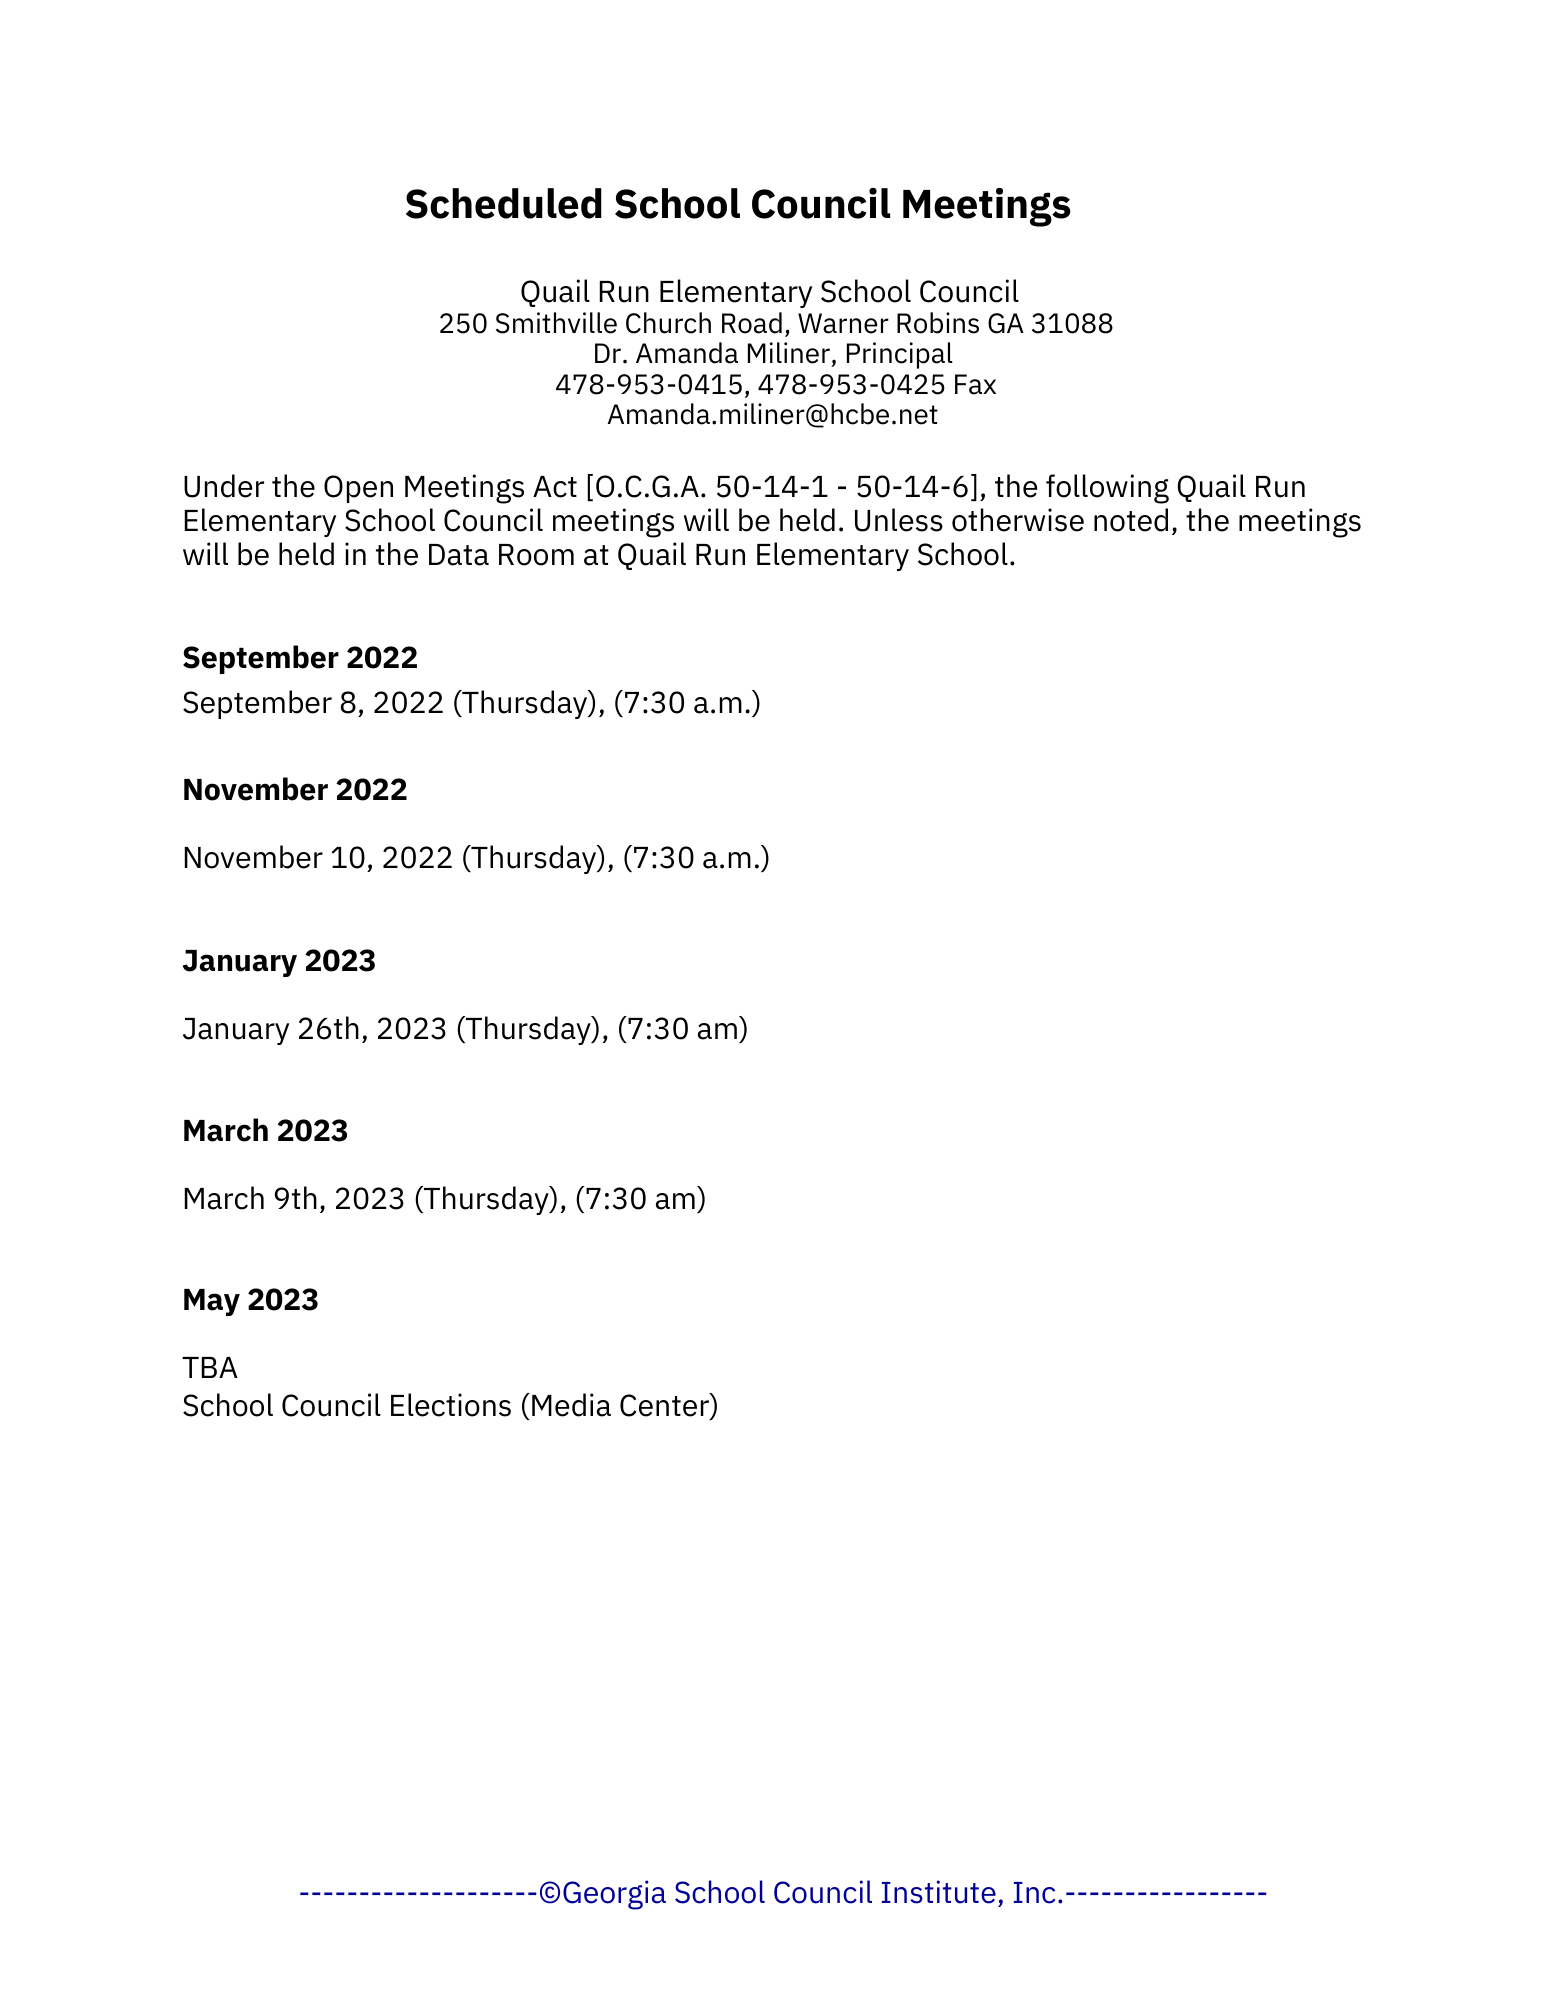 School Council Dates